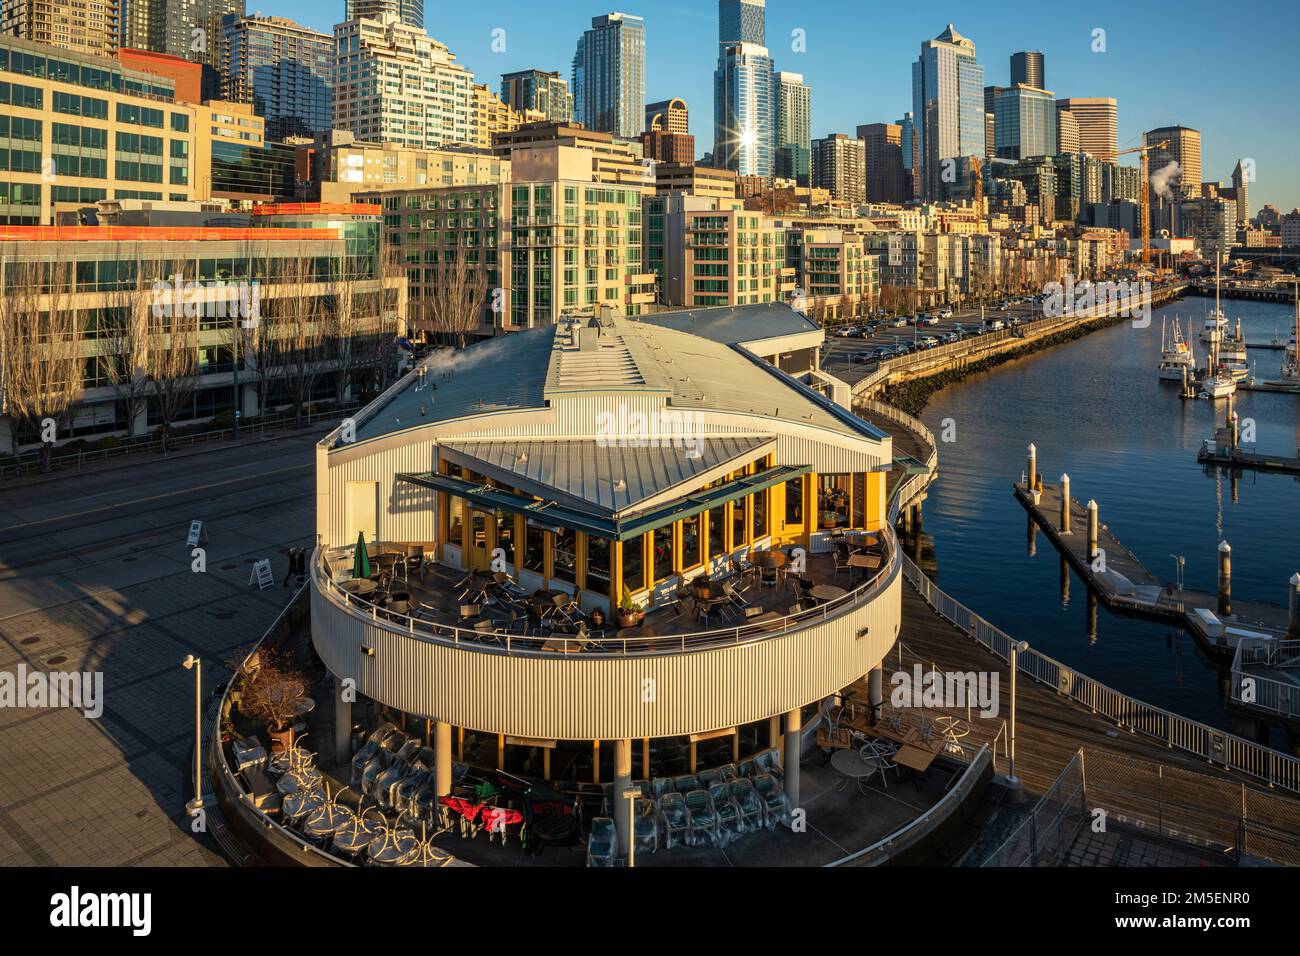 WA22865-00...WASHINGTON - The Seattle waterfront on Elliott Bay. 2022. Stock Photo